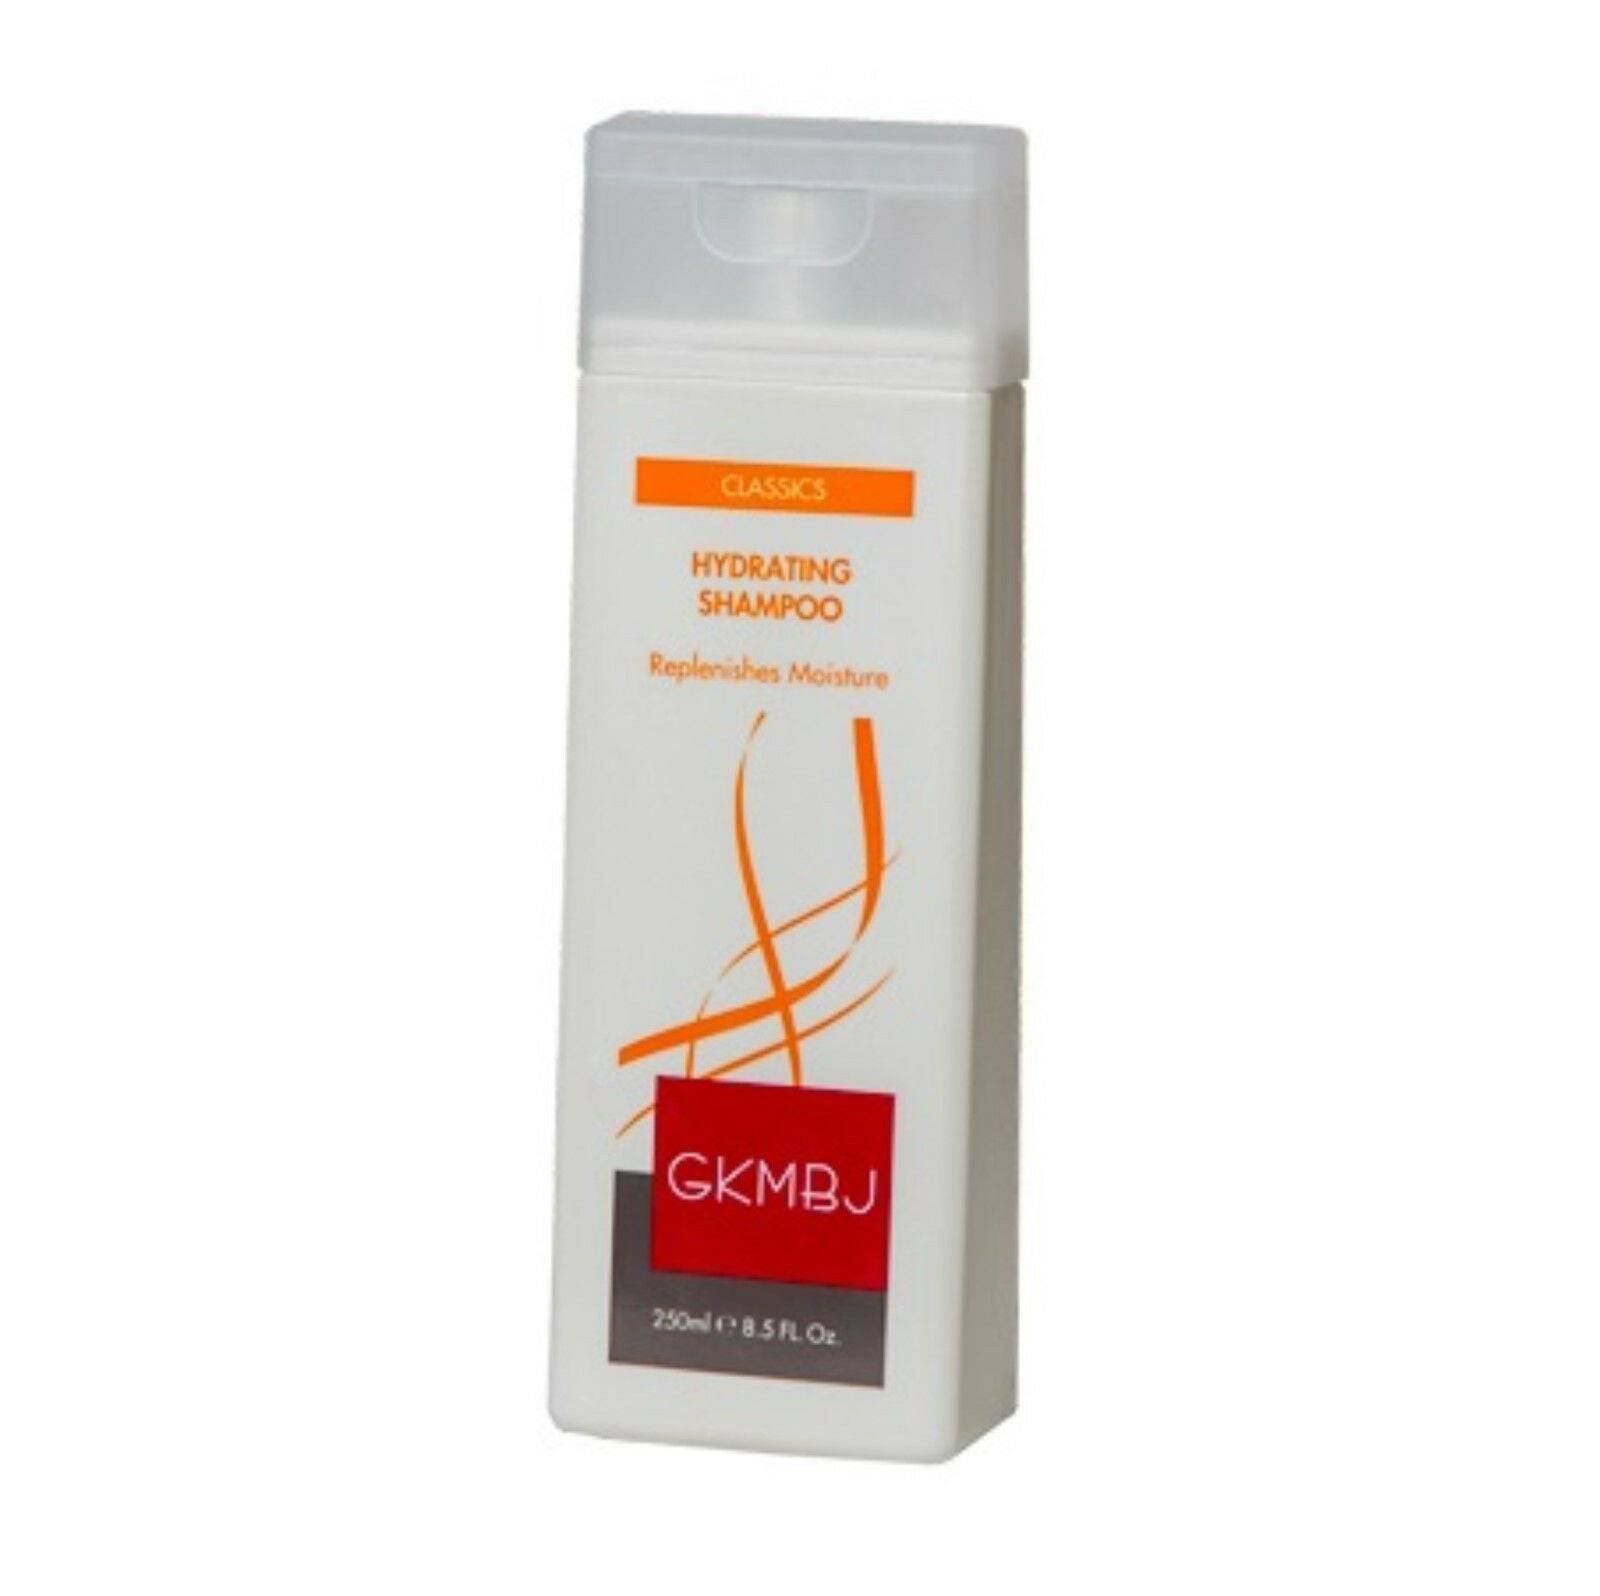 GKMBJ Hydrating Shampoo & Honey Creme Conditioner 250ml's Replenishes  Moisture - On Line Hair Depot